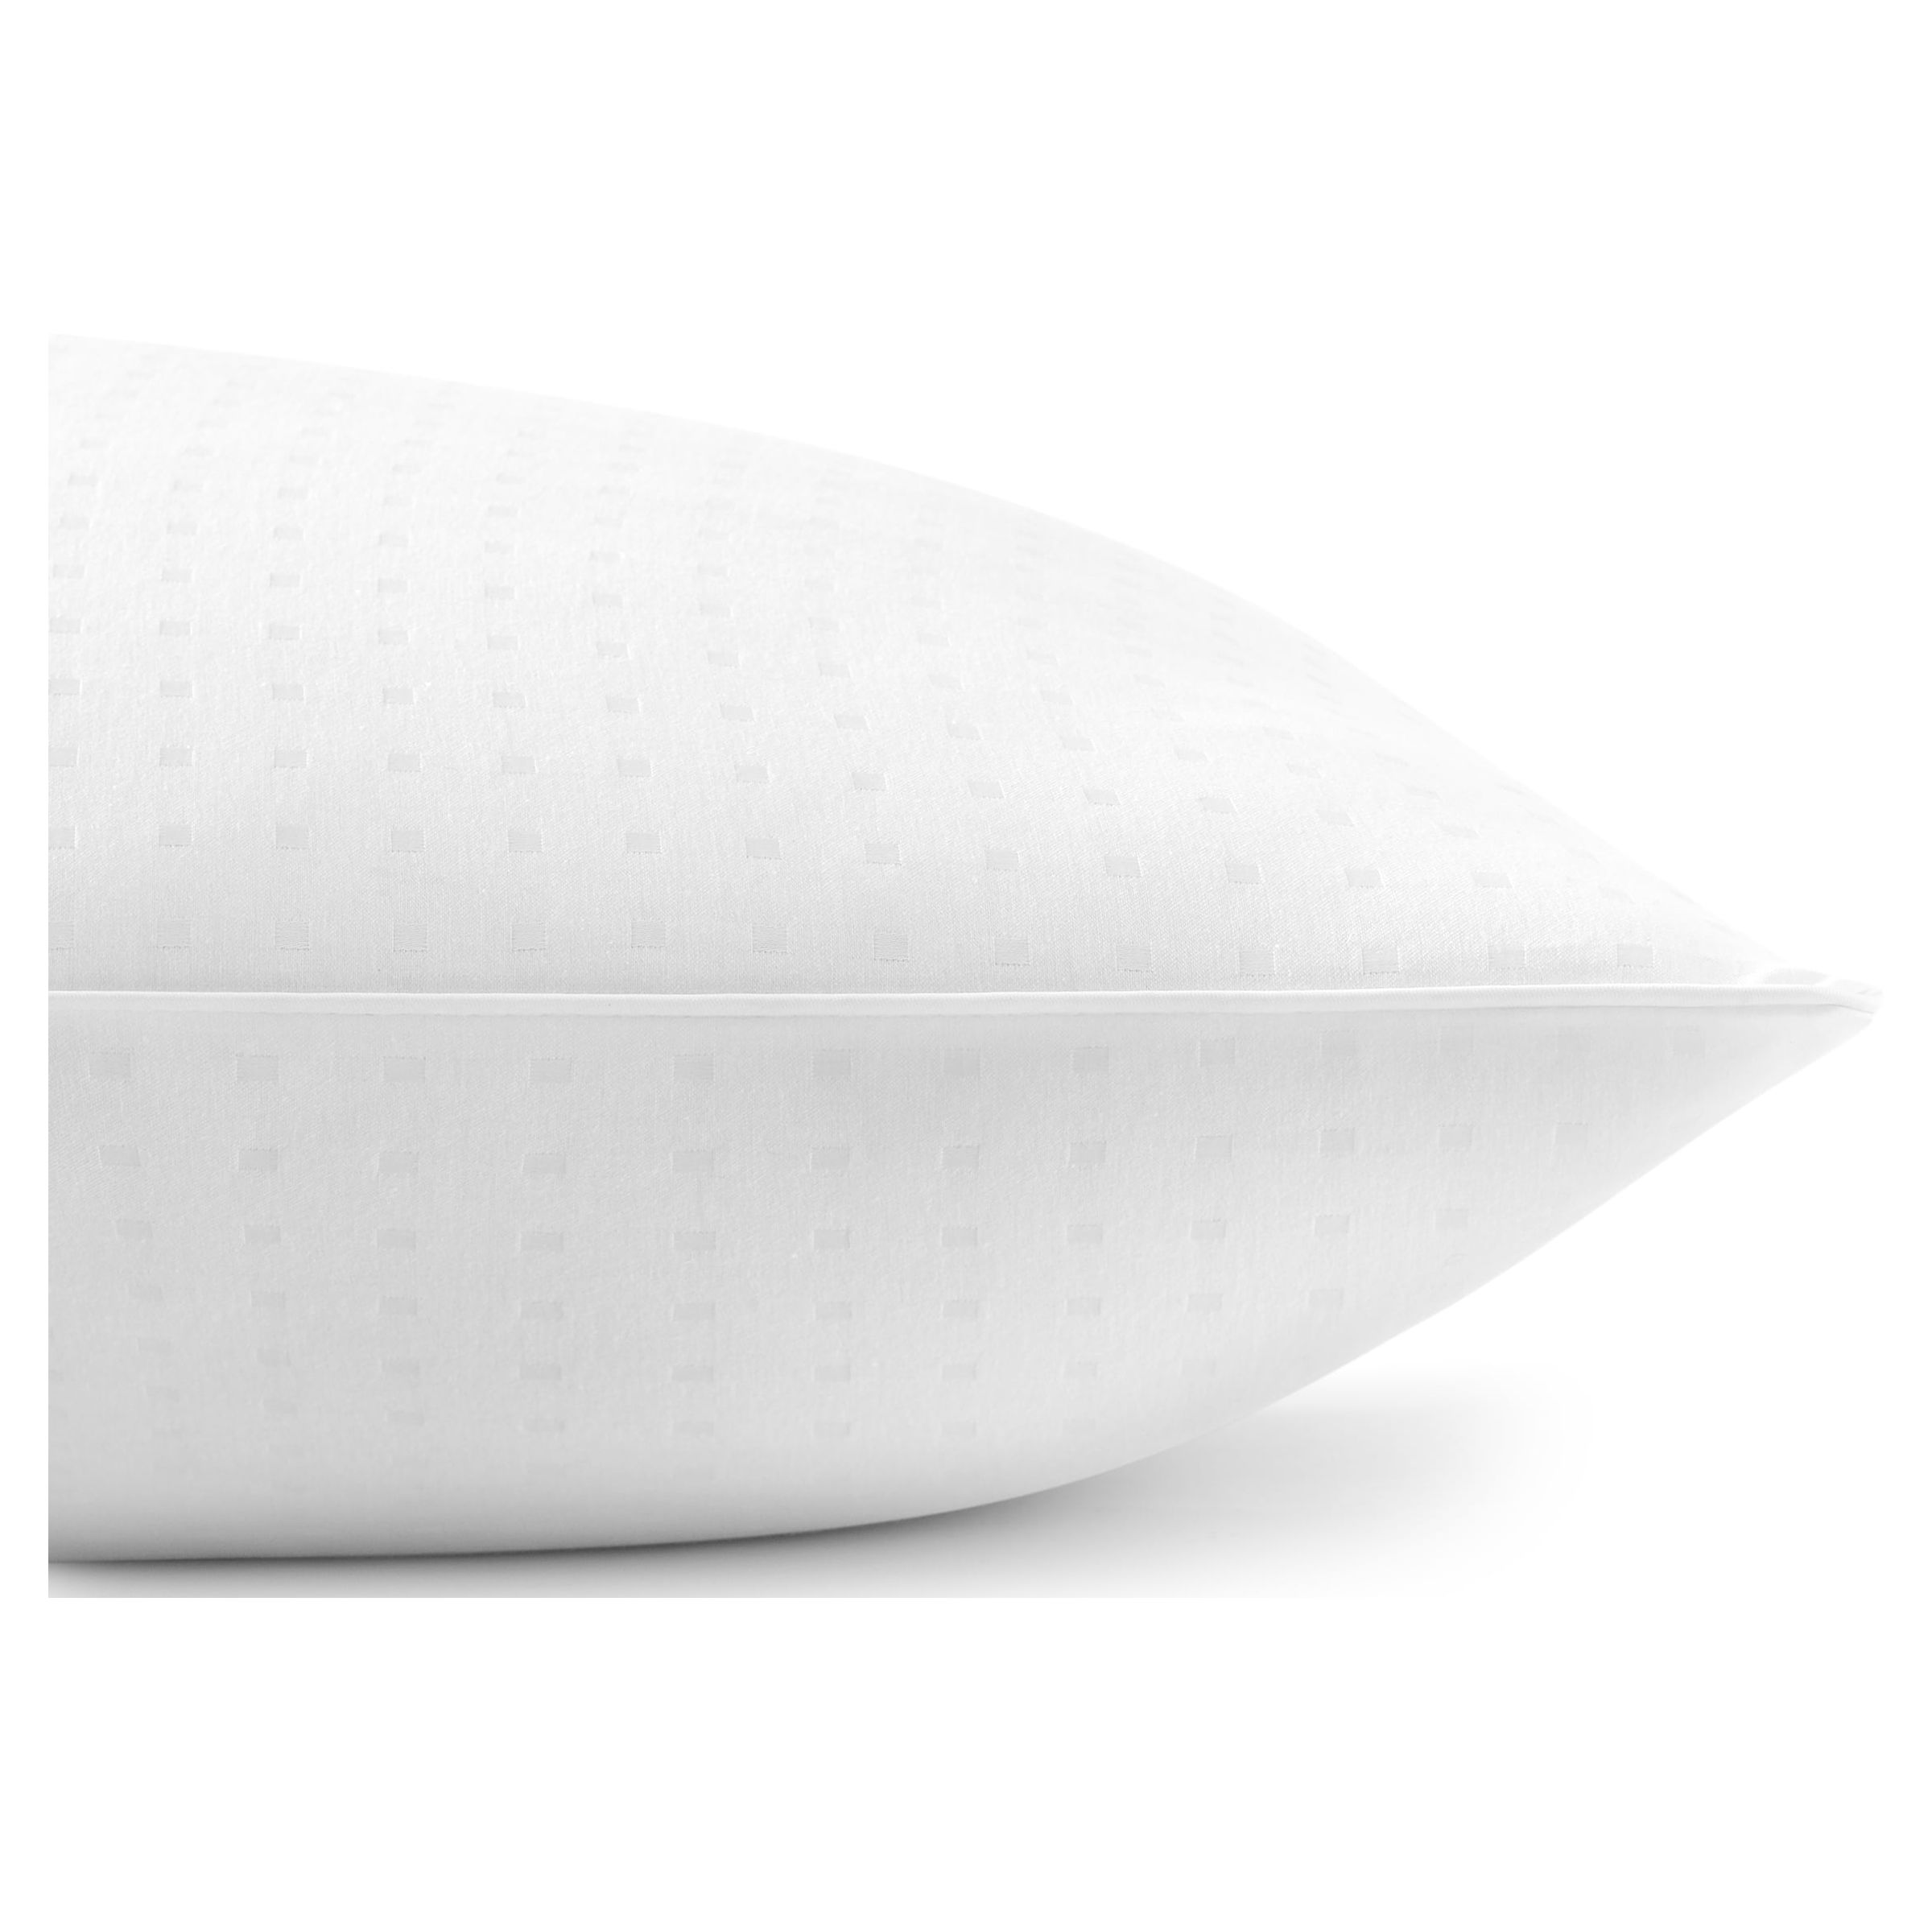 Sertapedic Won't Go Flat Bed Pillow, Standard/Queen - image 5 of 5